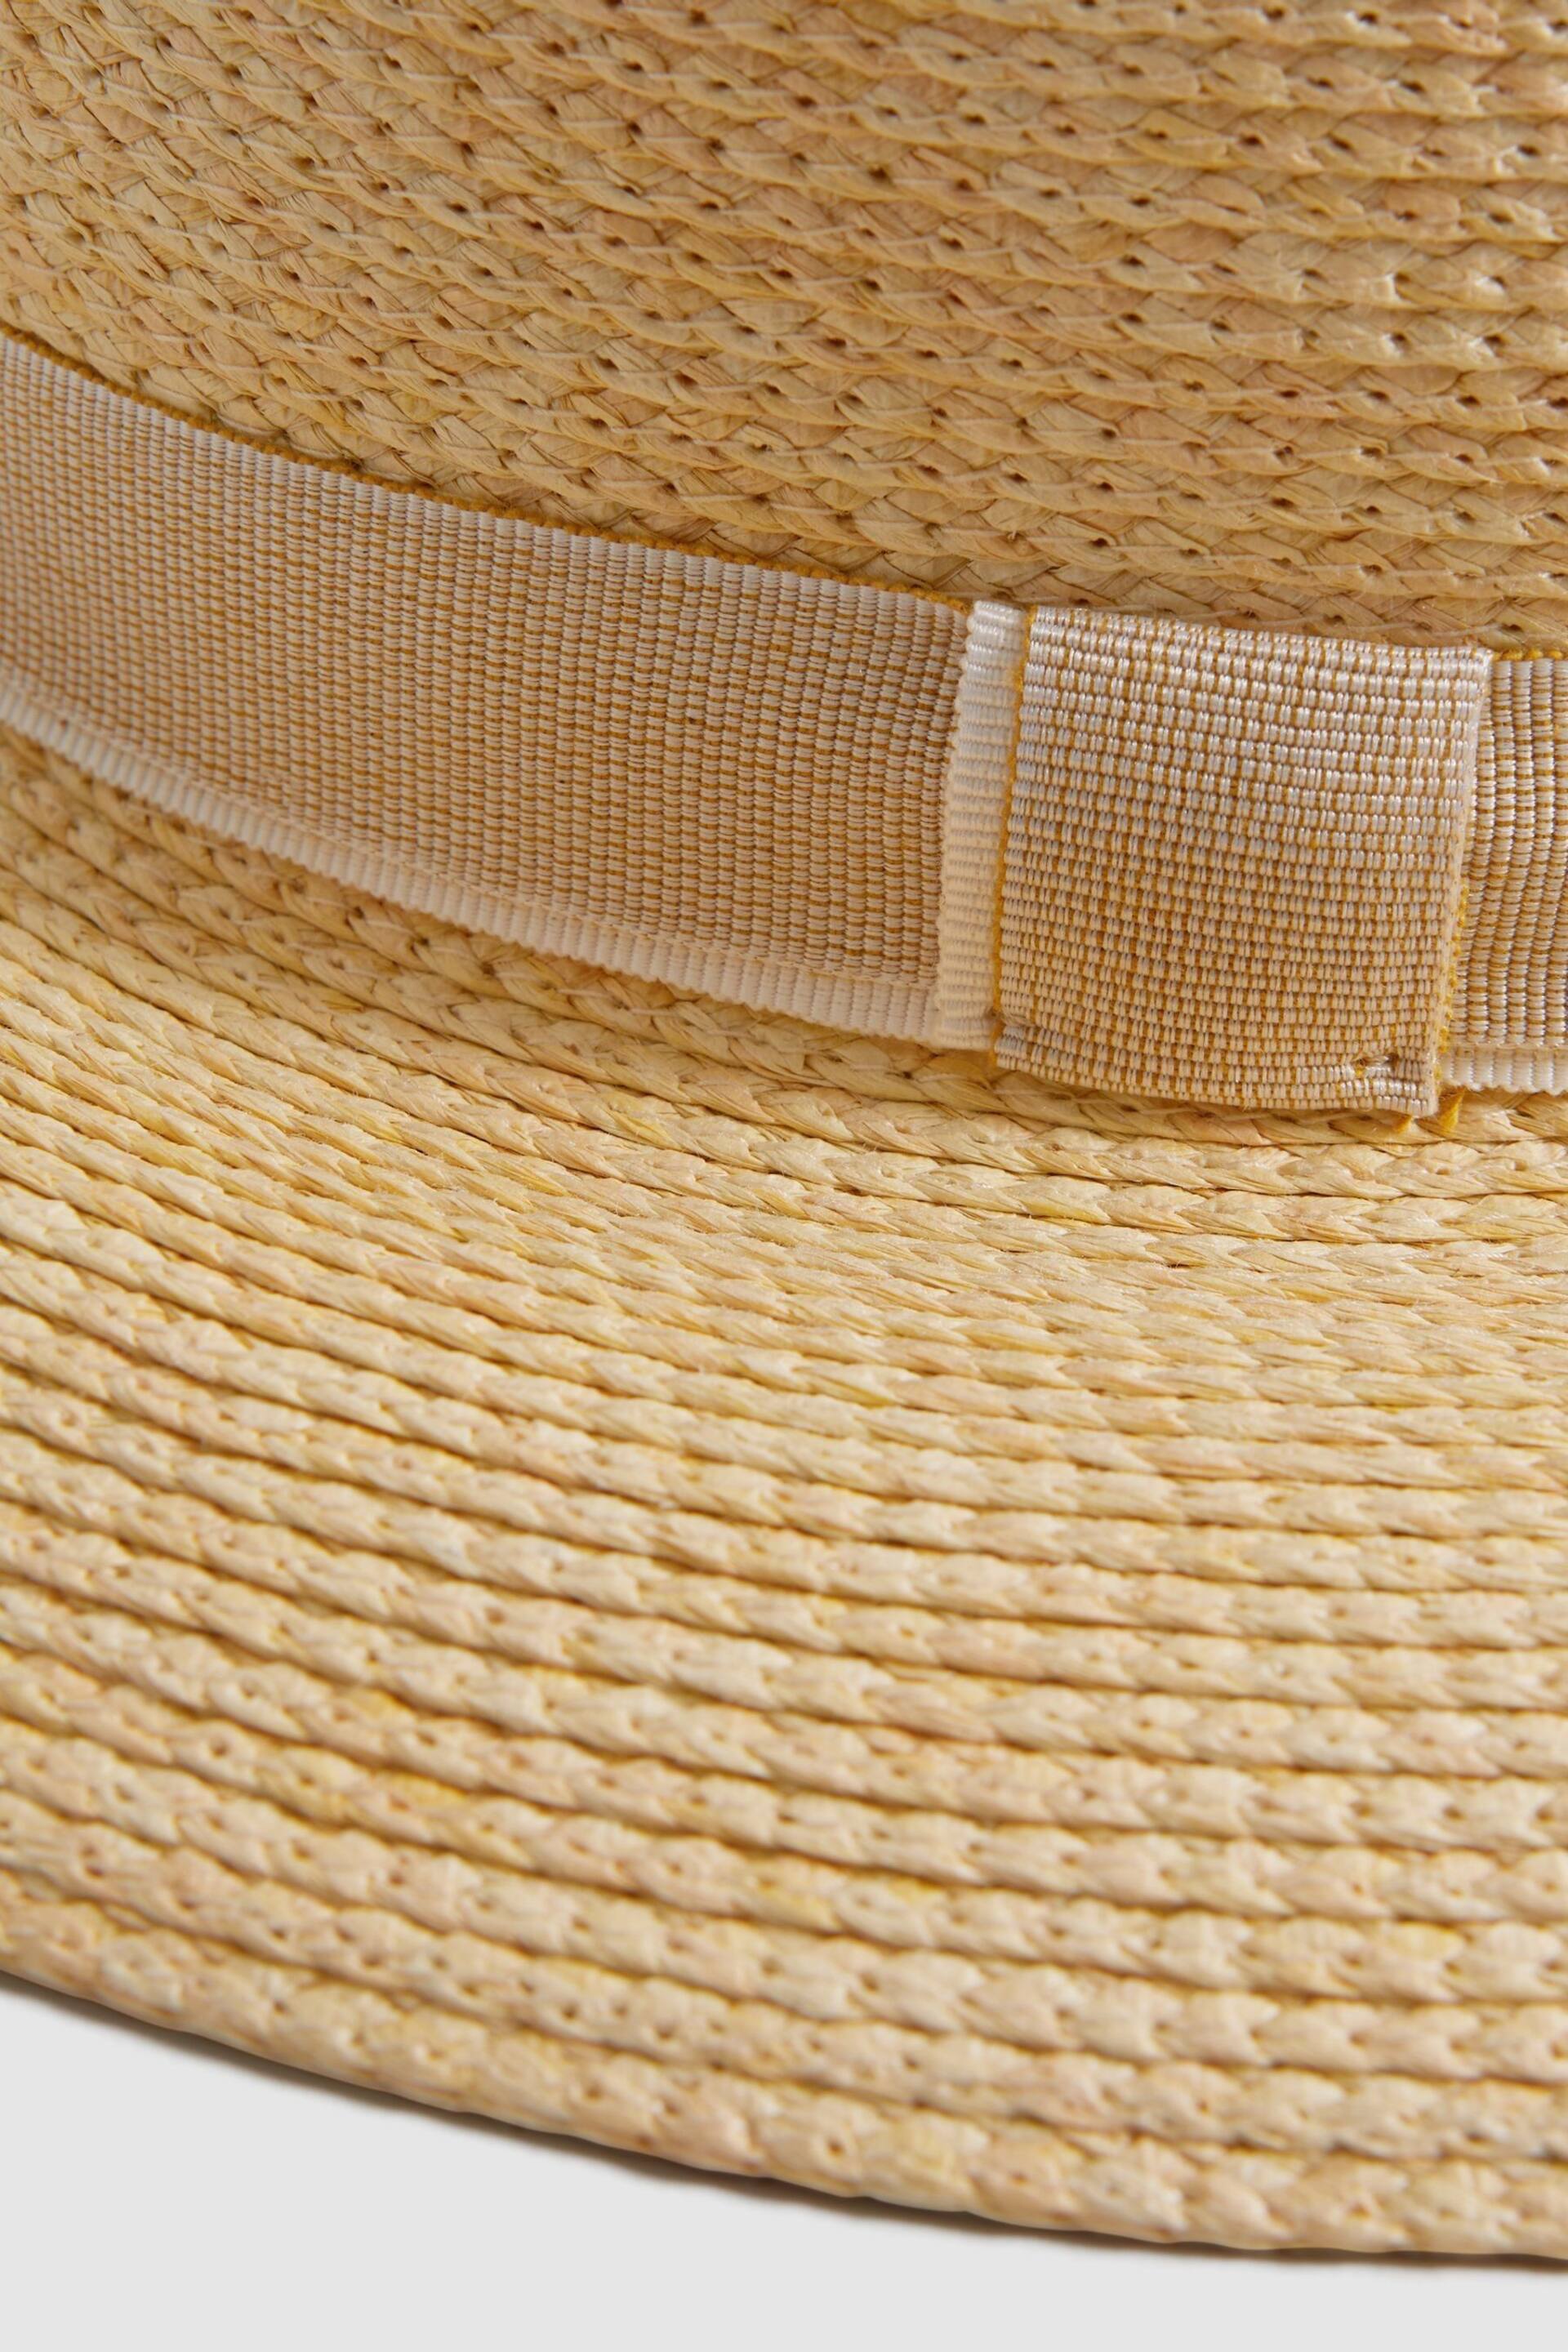 Reiss Natural Gracie Raffia Short Brim Sun Hat - Image 4 of 4